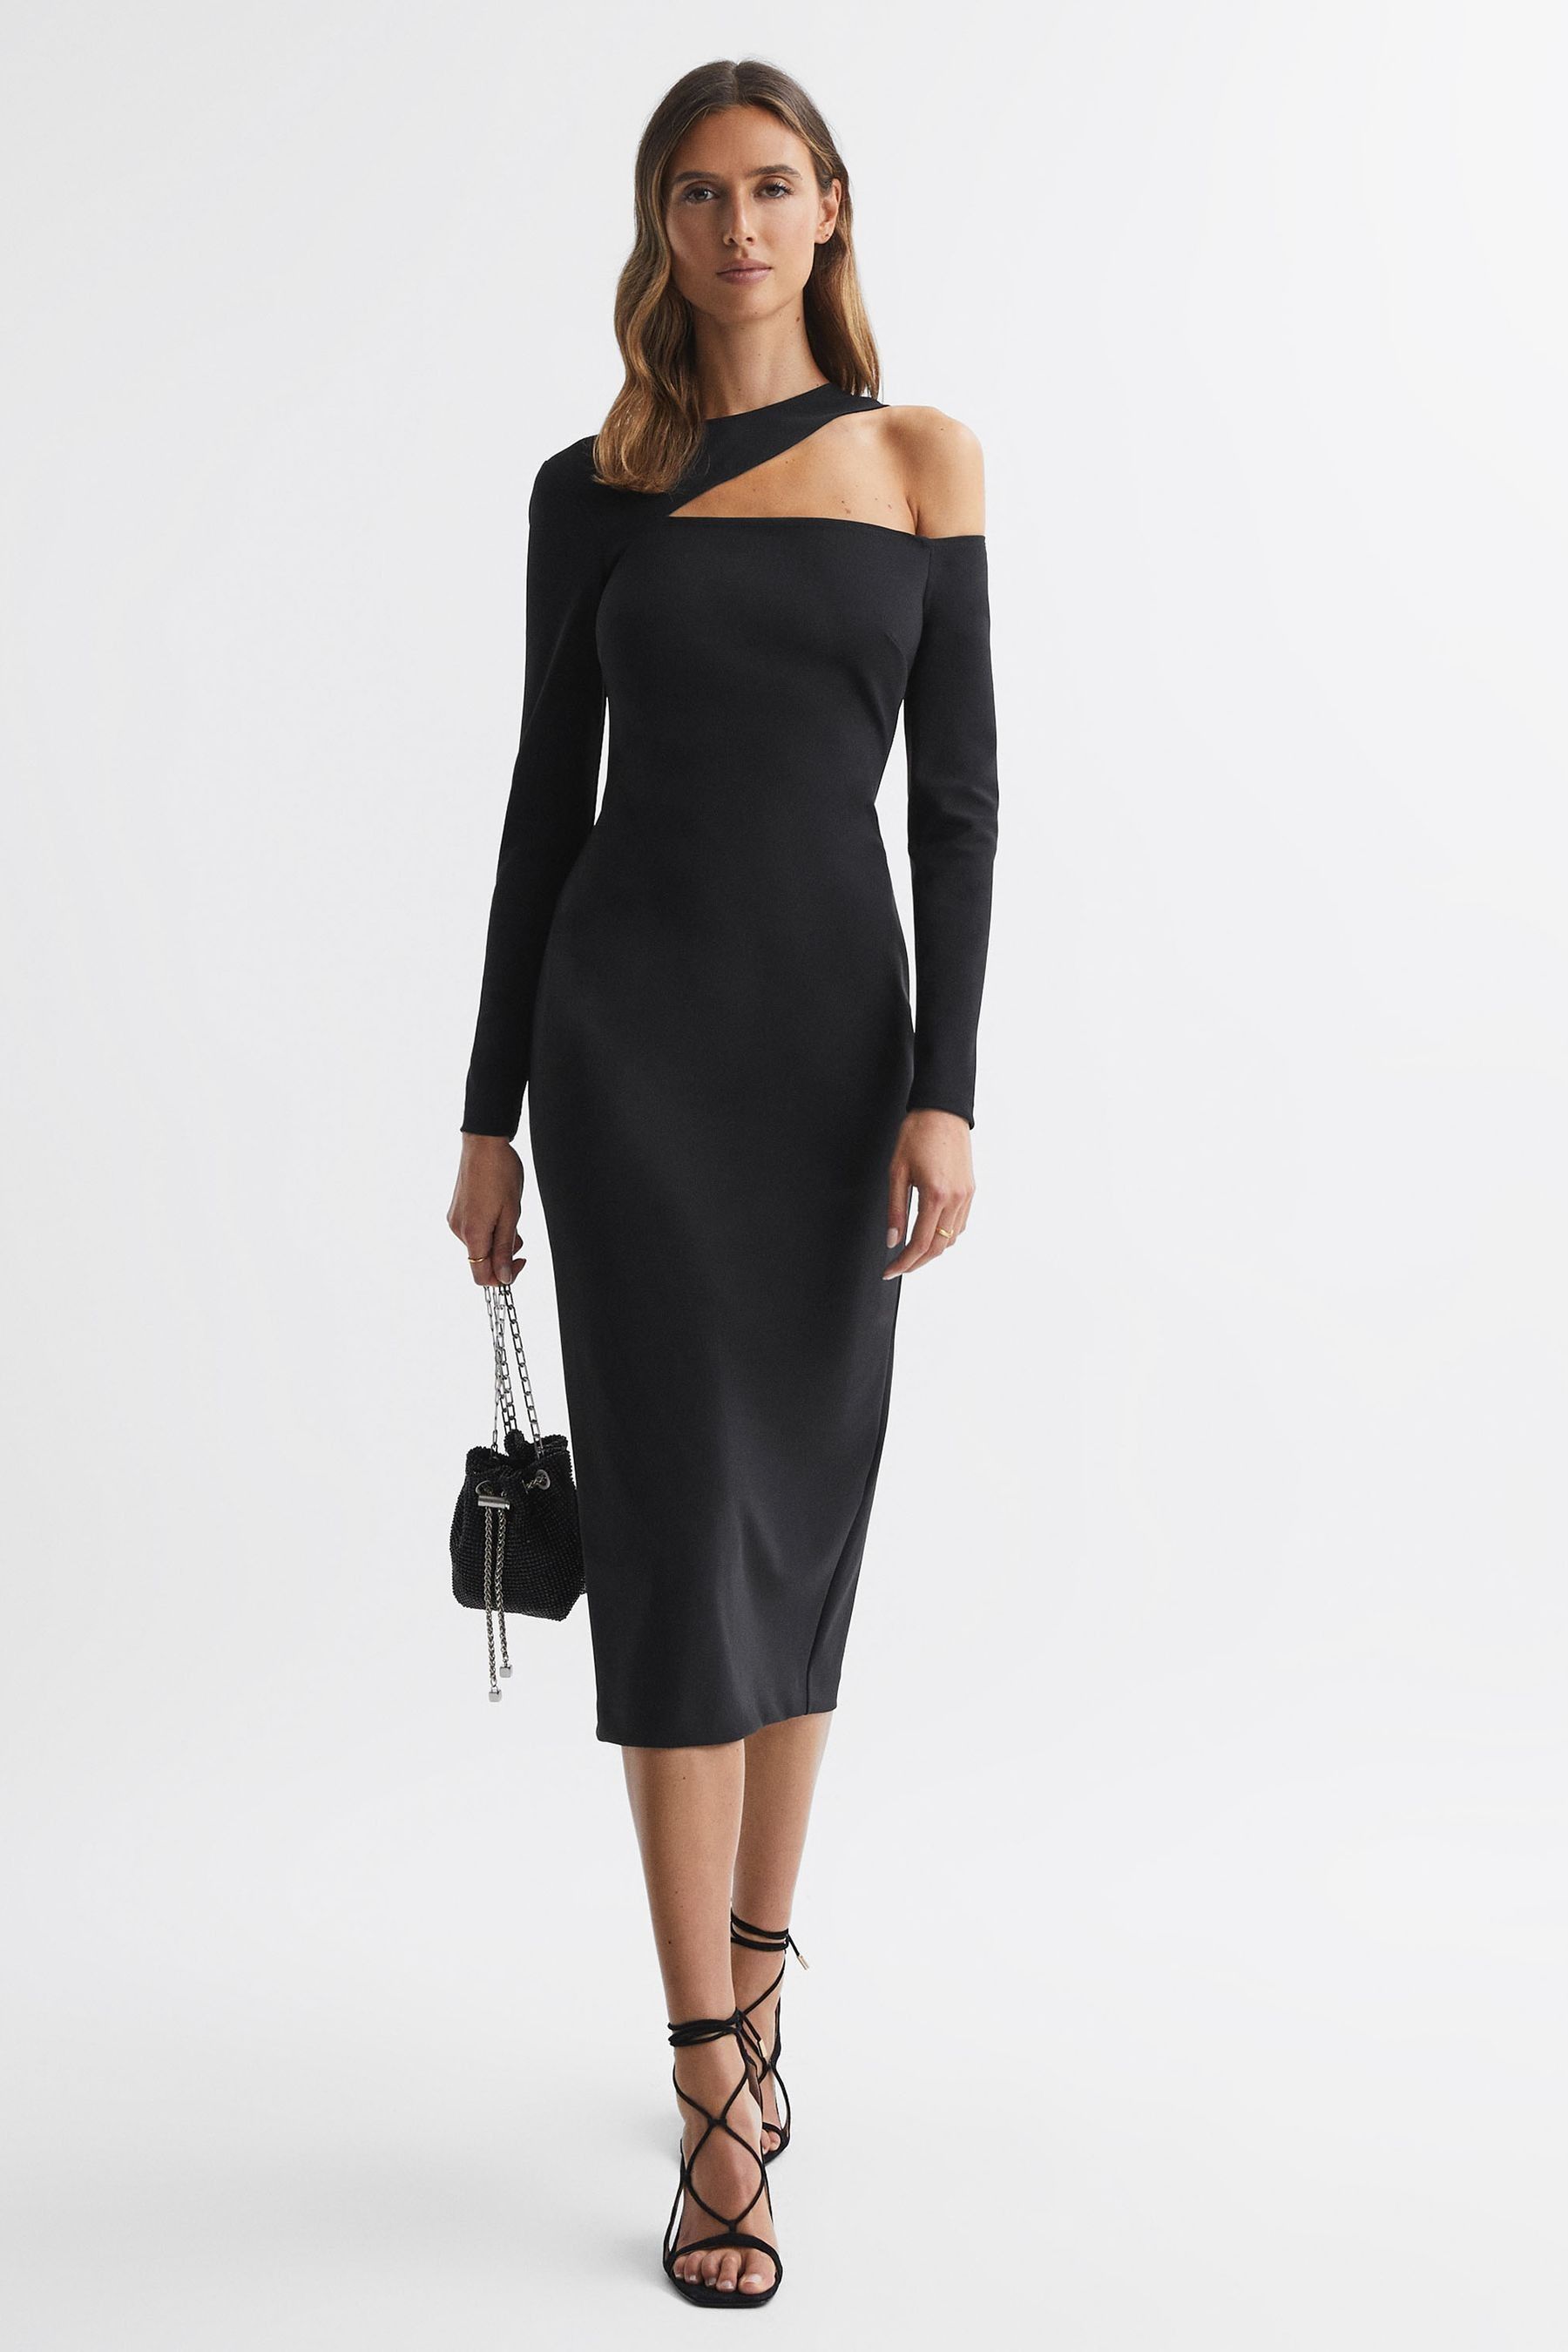 Reiss Tiffany - Black Bodycon Off-the-shoulder Midi Dress, Us 10